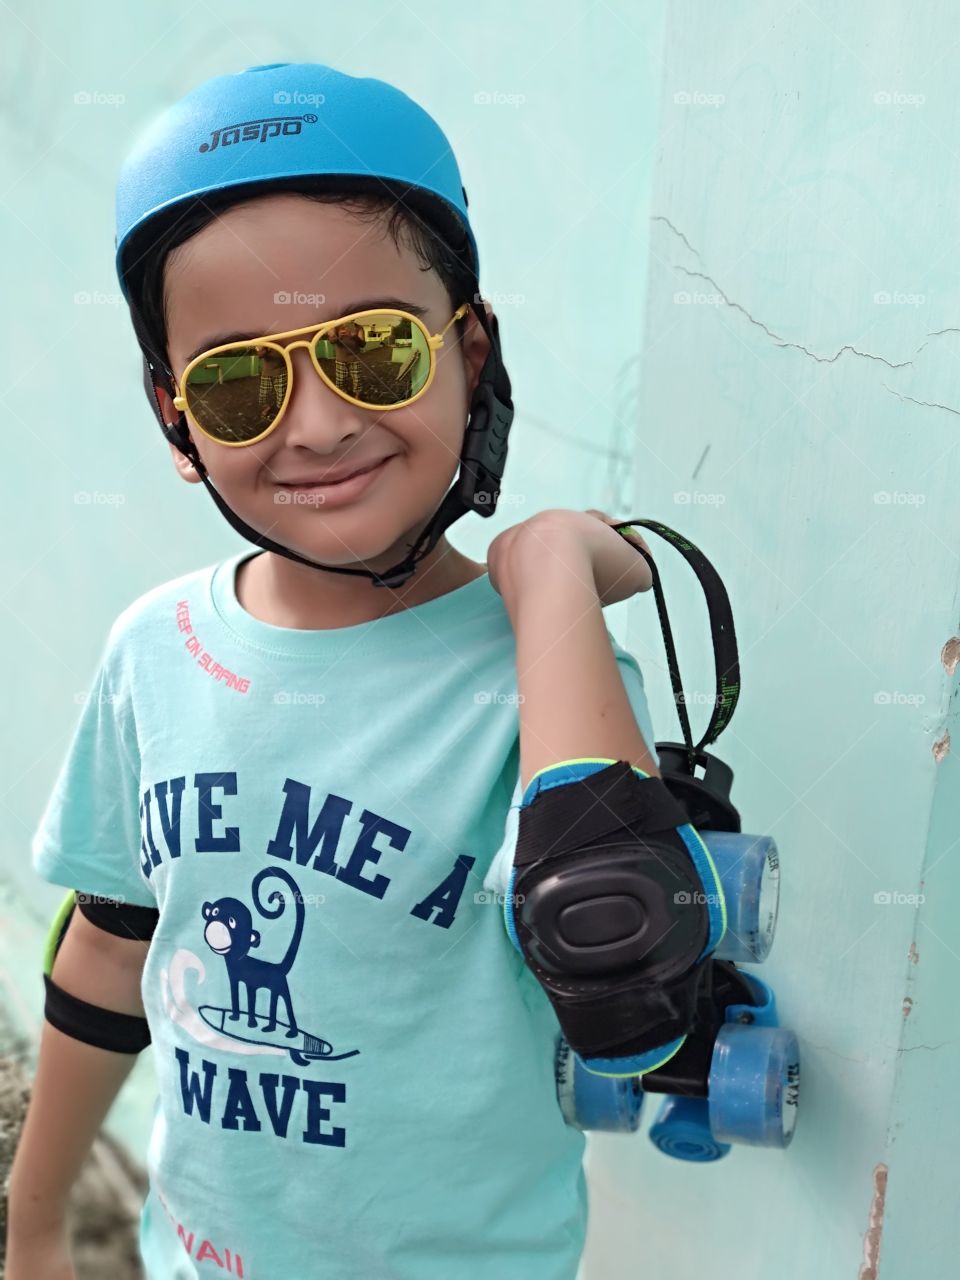 Smiling Indian kid with skates wearing helmet